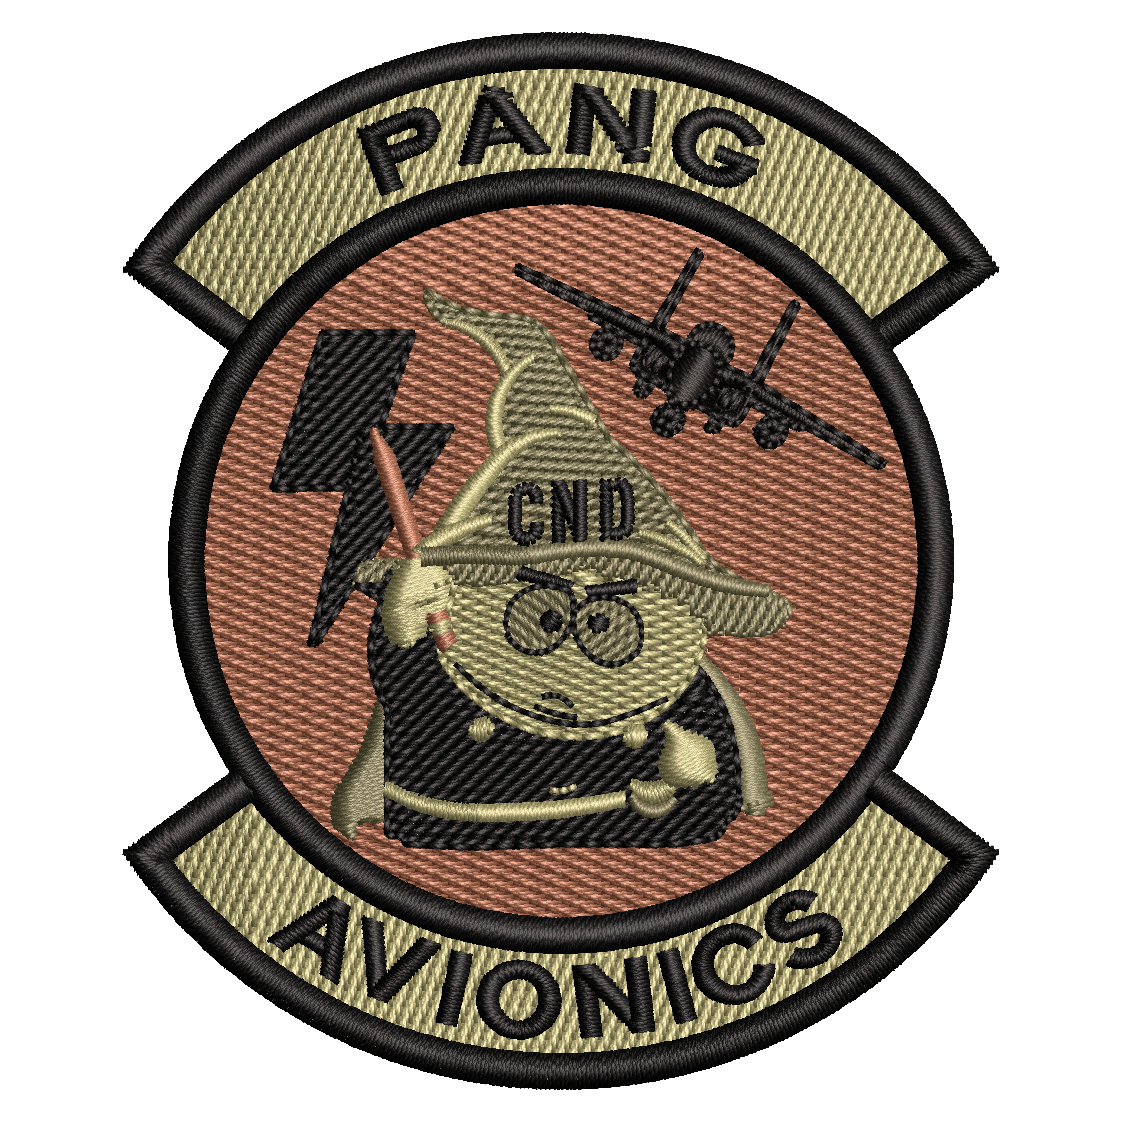 PANG AVIONICS - OCP Patch (142 AMXS)